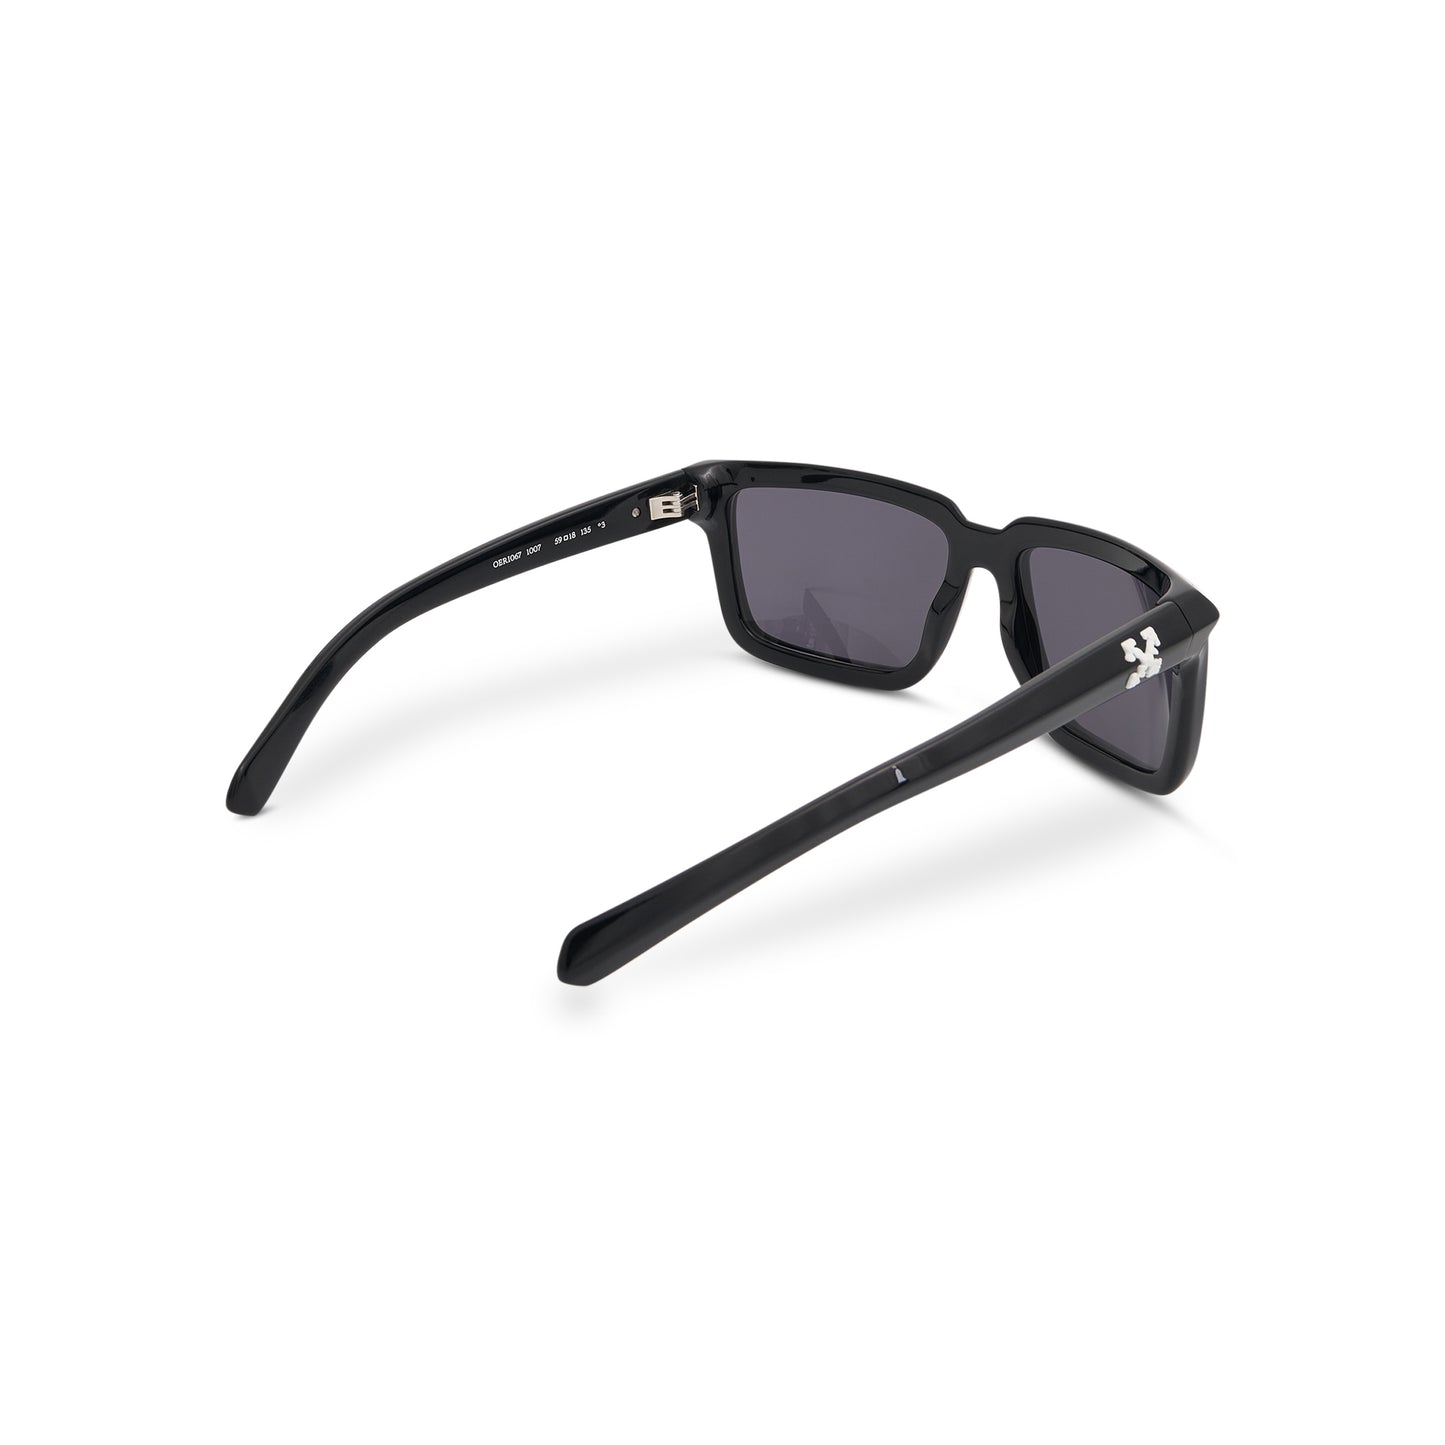 Portland Sunglasses in Black/Dark Grey